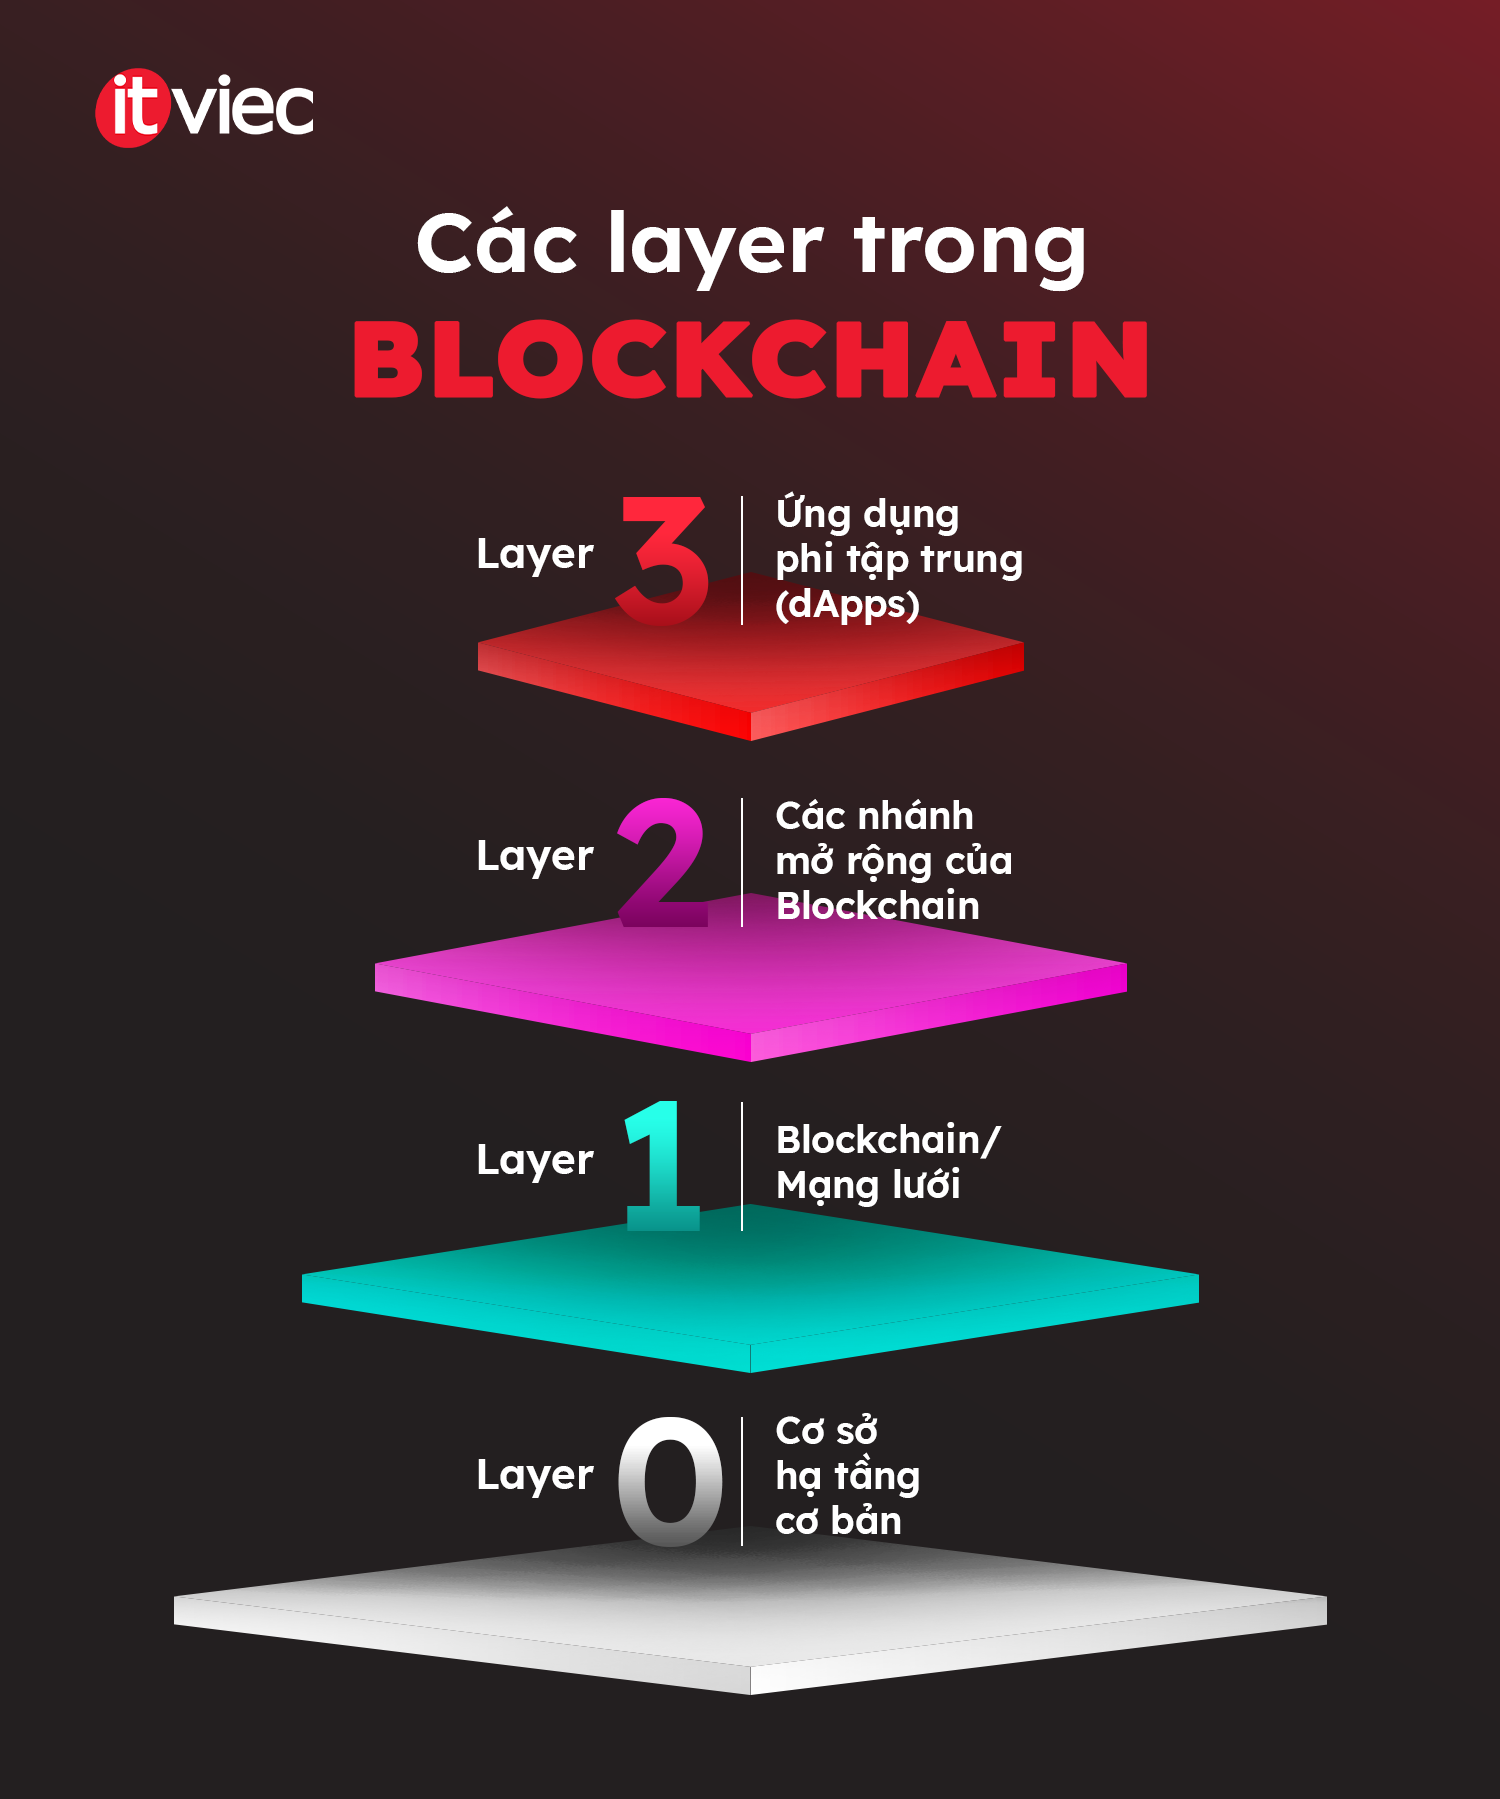 các layer blockchain - layer 1 trong blockchain - itviec blog